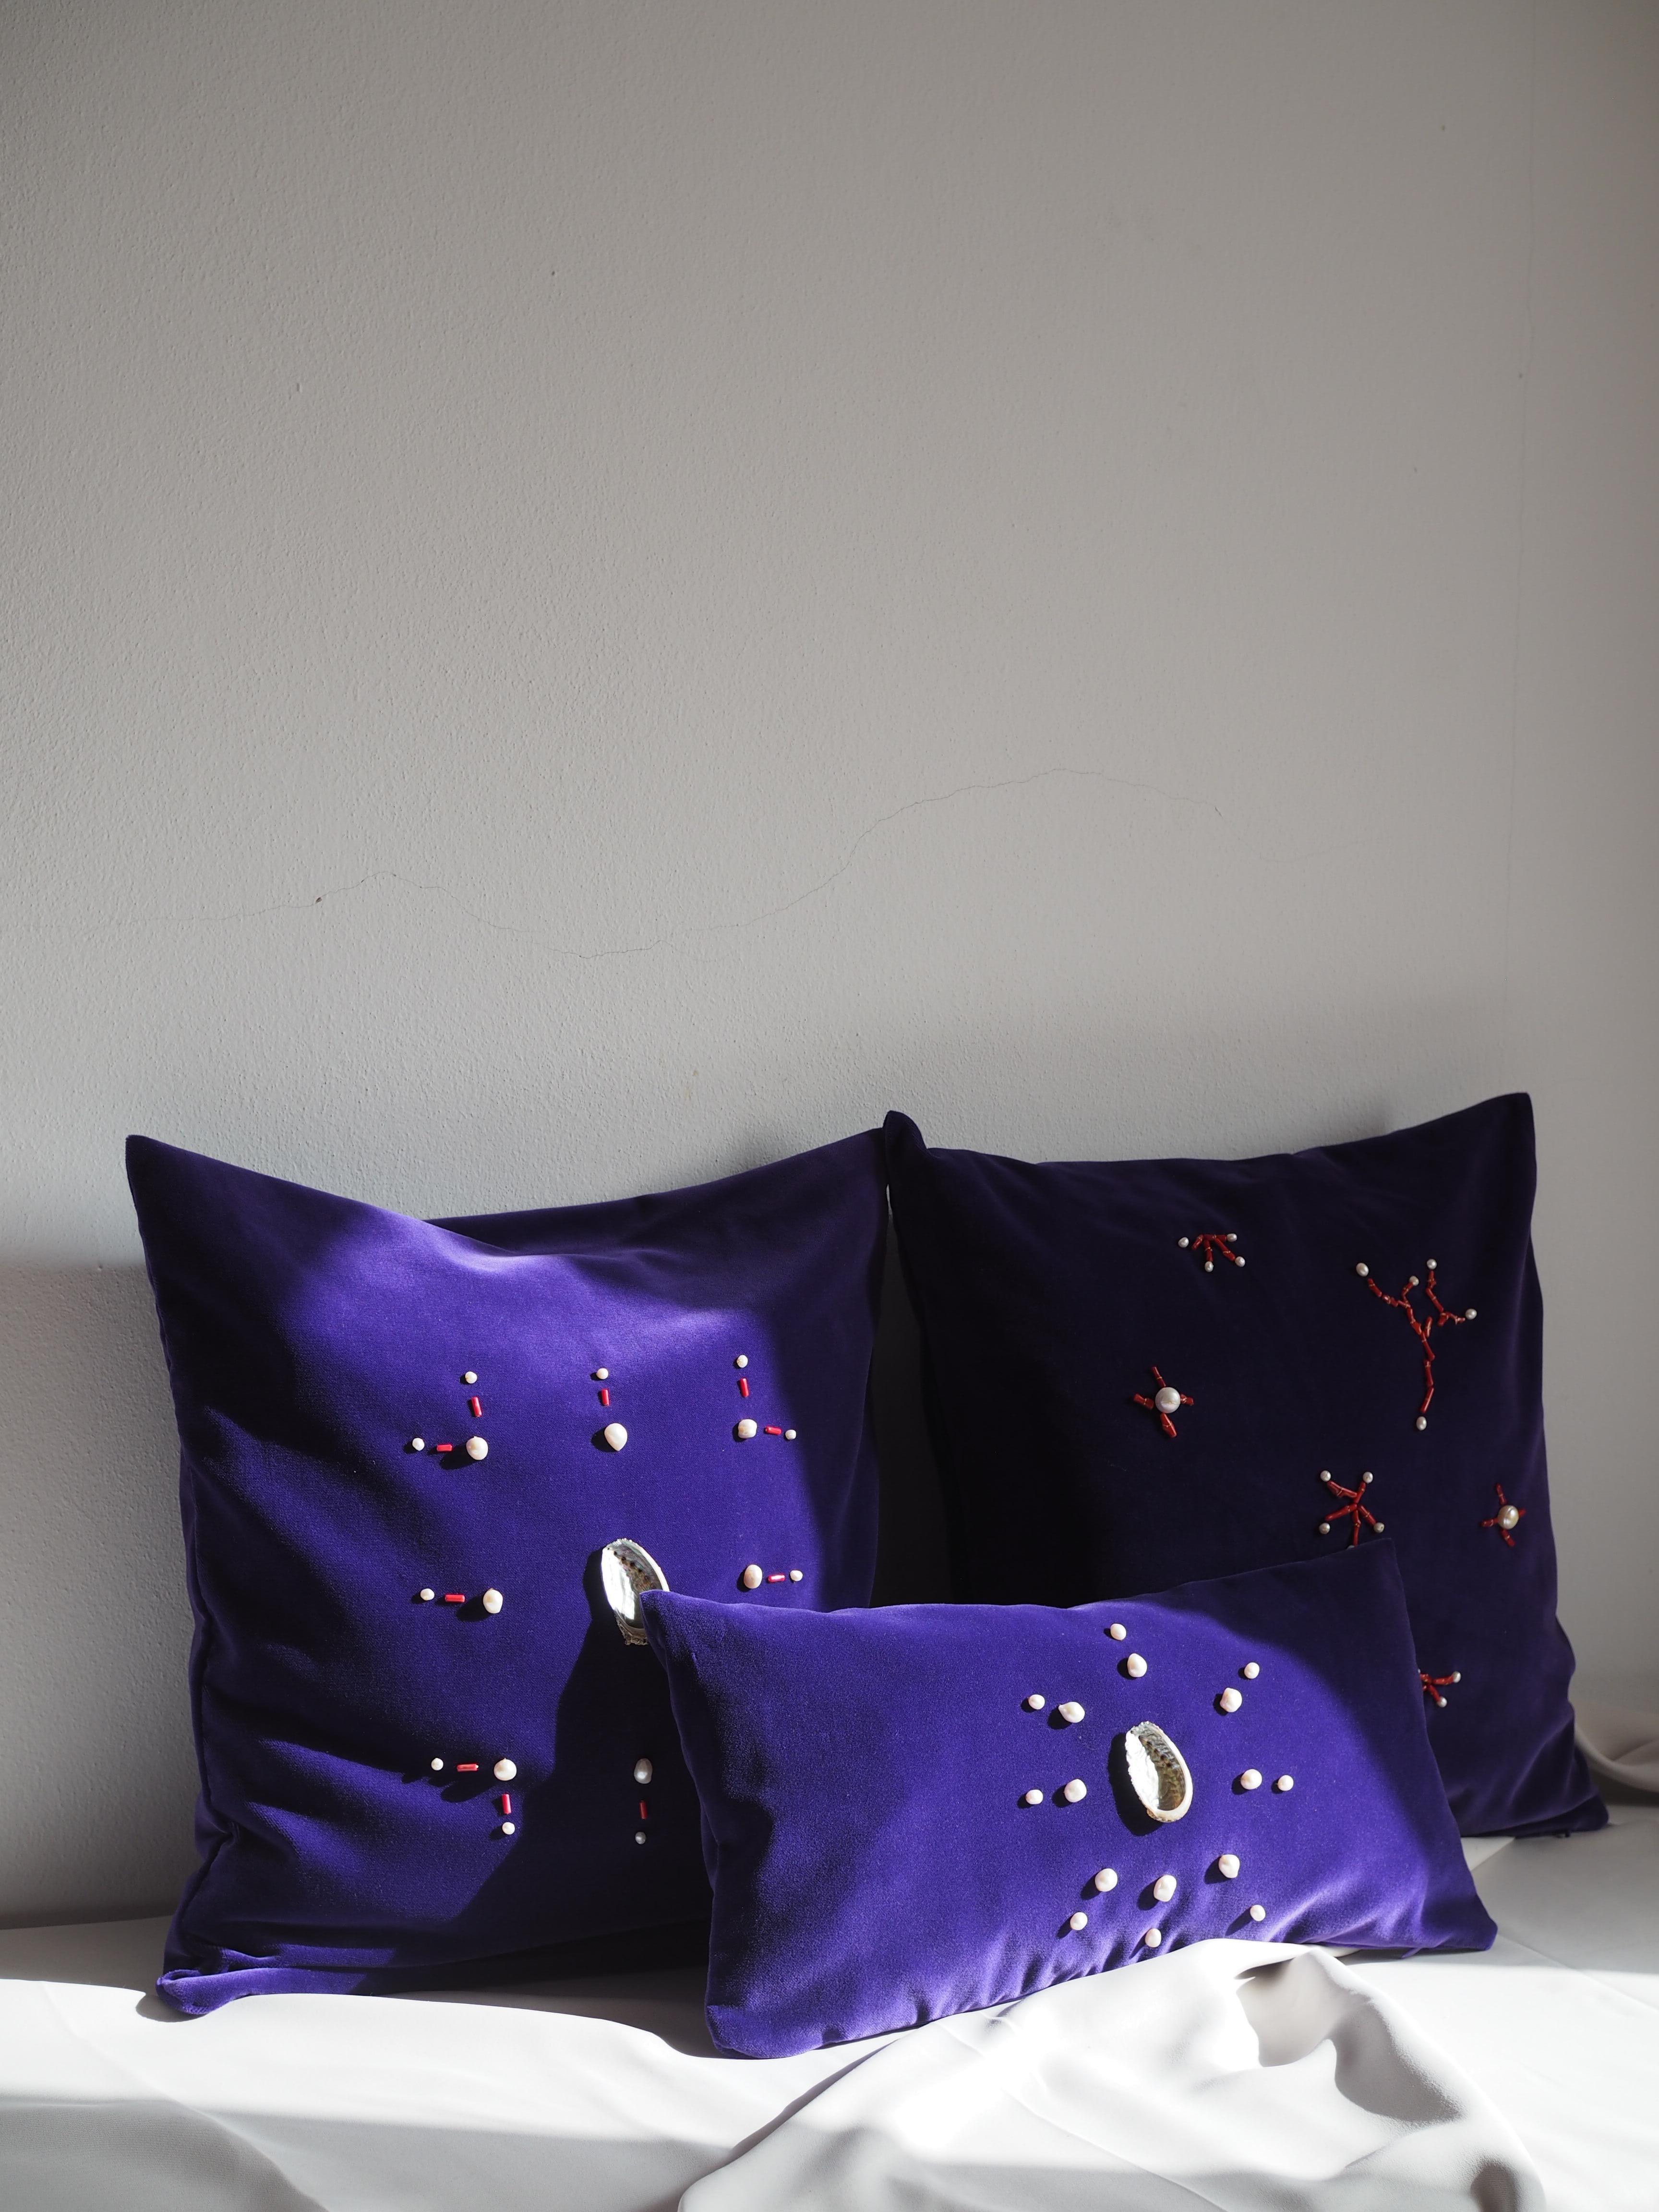 Embroidered Bon Appetit 012 Decorative Cushion Culto Ponsoda 21st century desingn For Sale